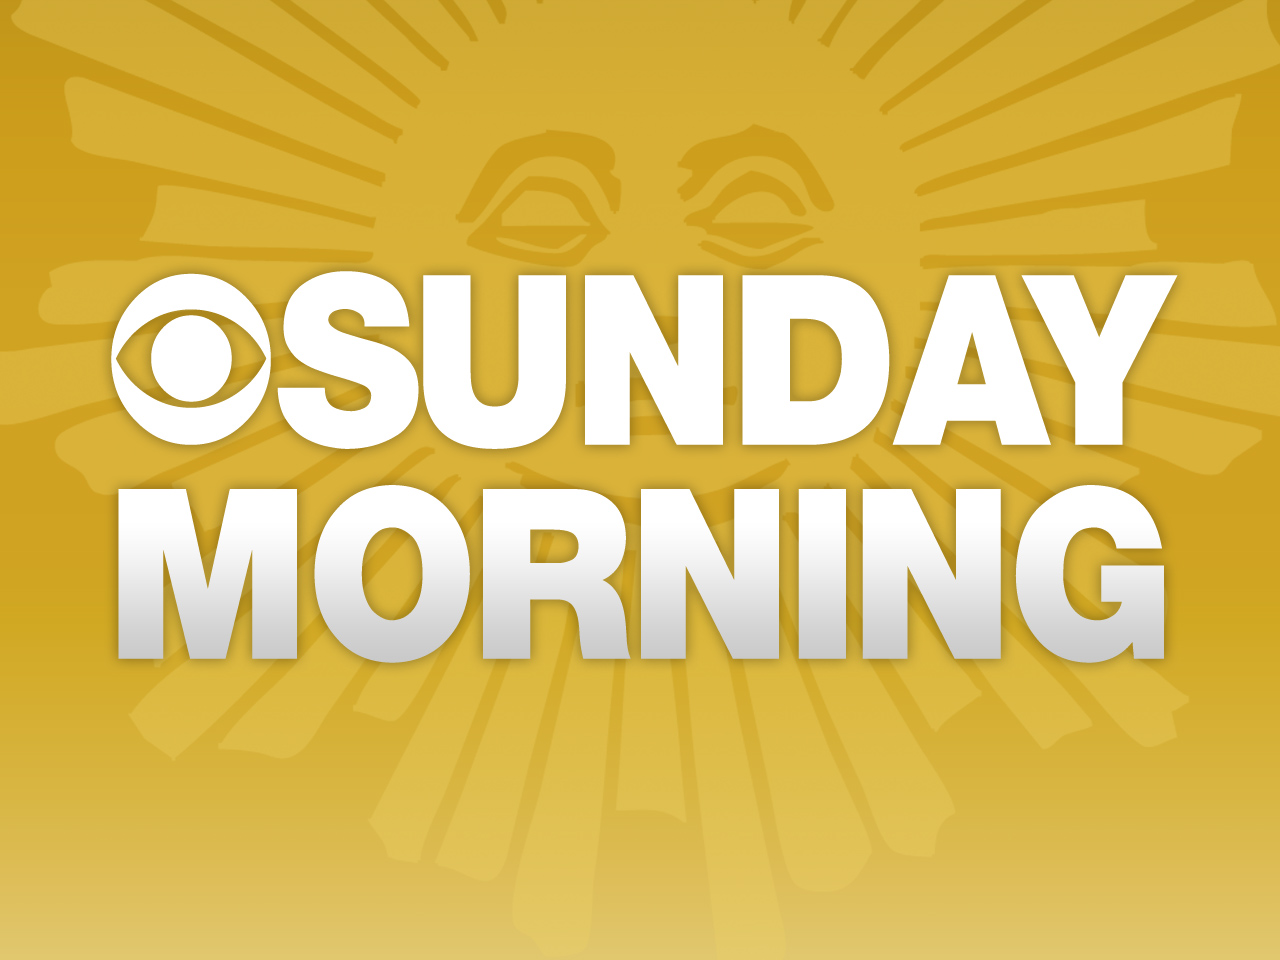 "Sunday Morning" show times CBS News